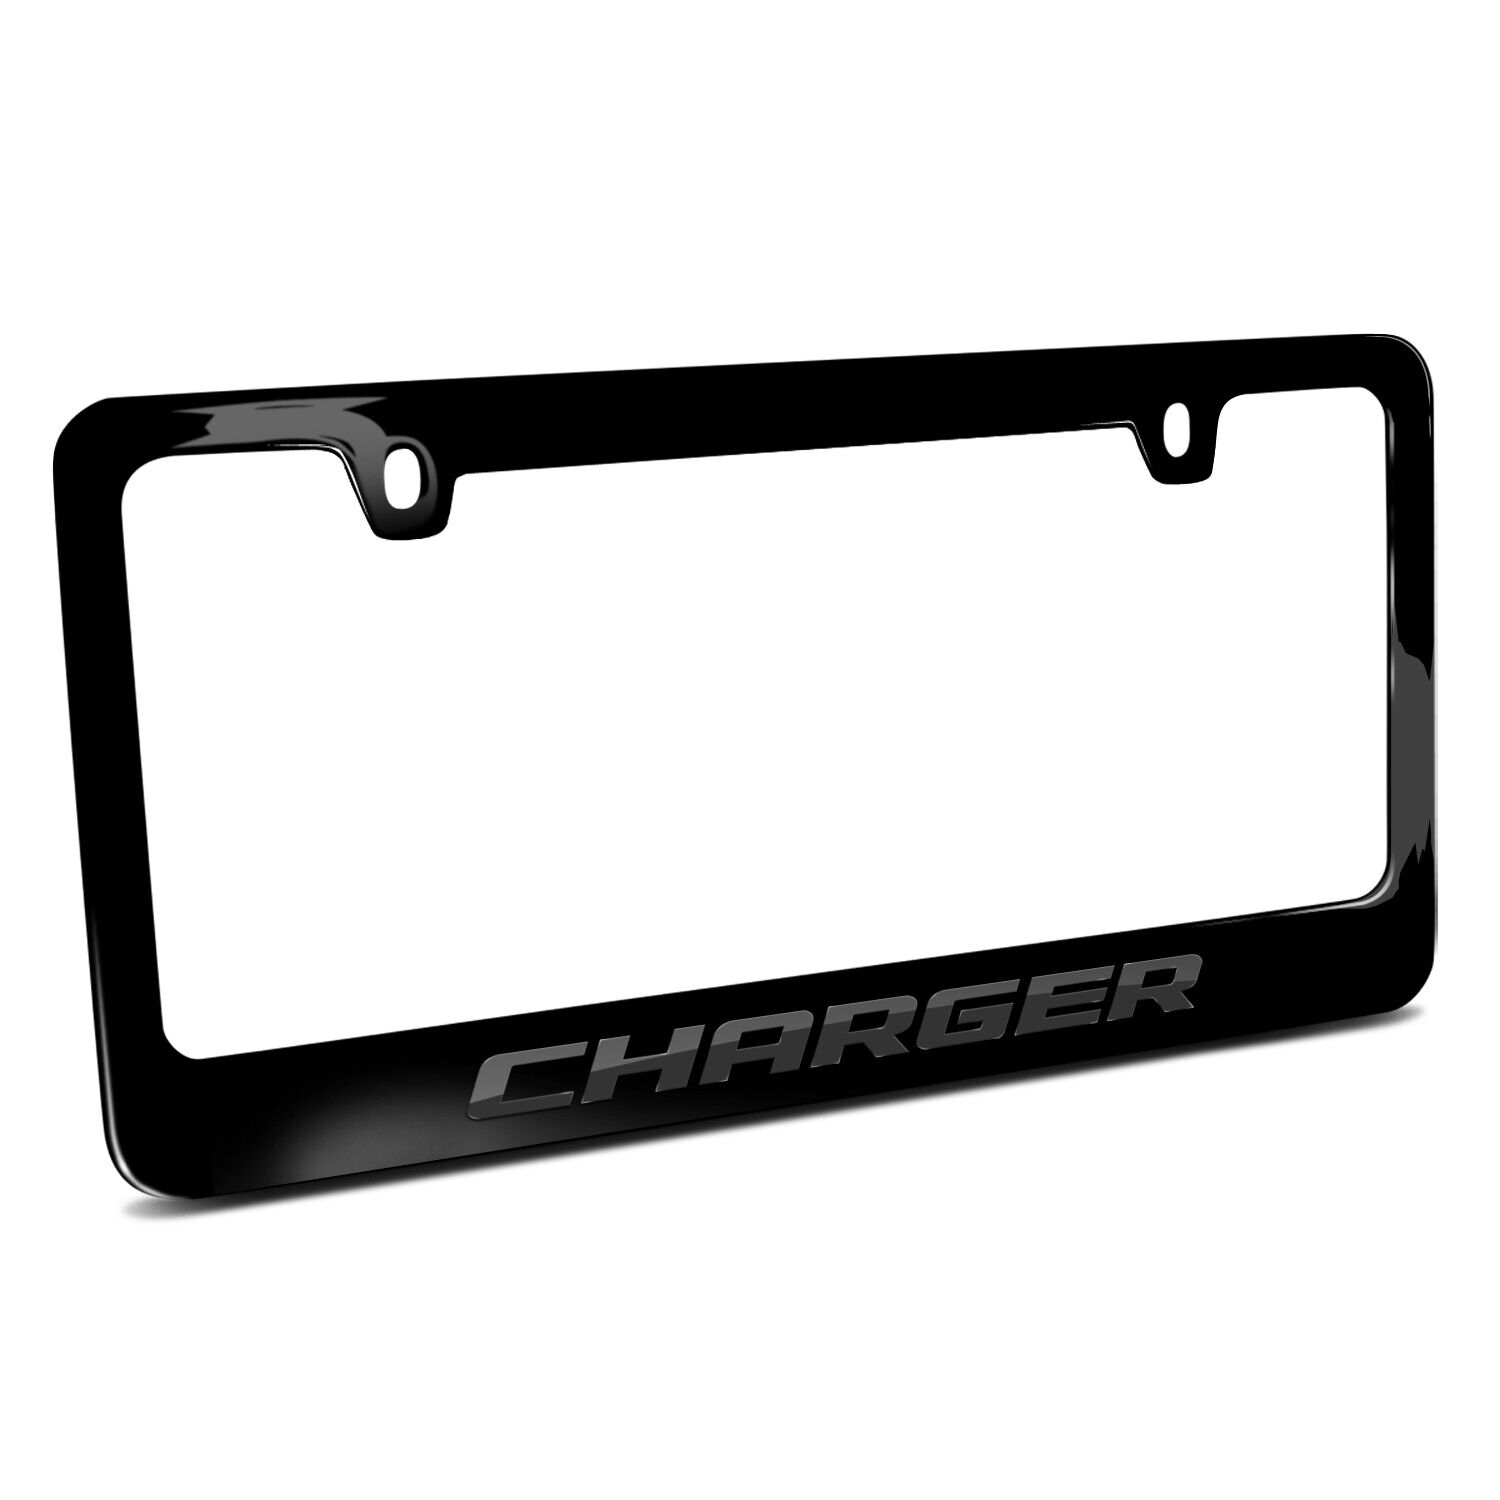 Dodge Charger in 3D Dark Gray Letters on Black Metal License Plate Frame